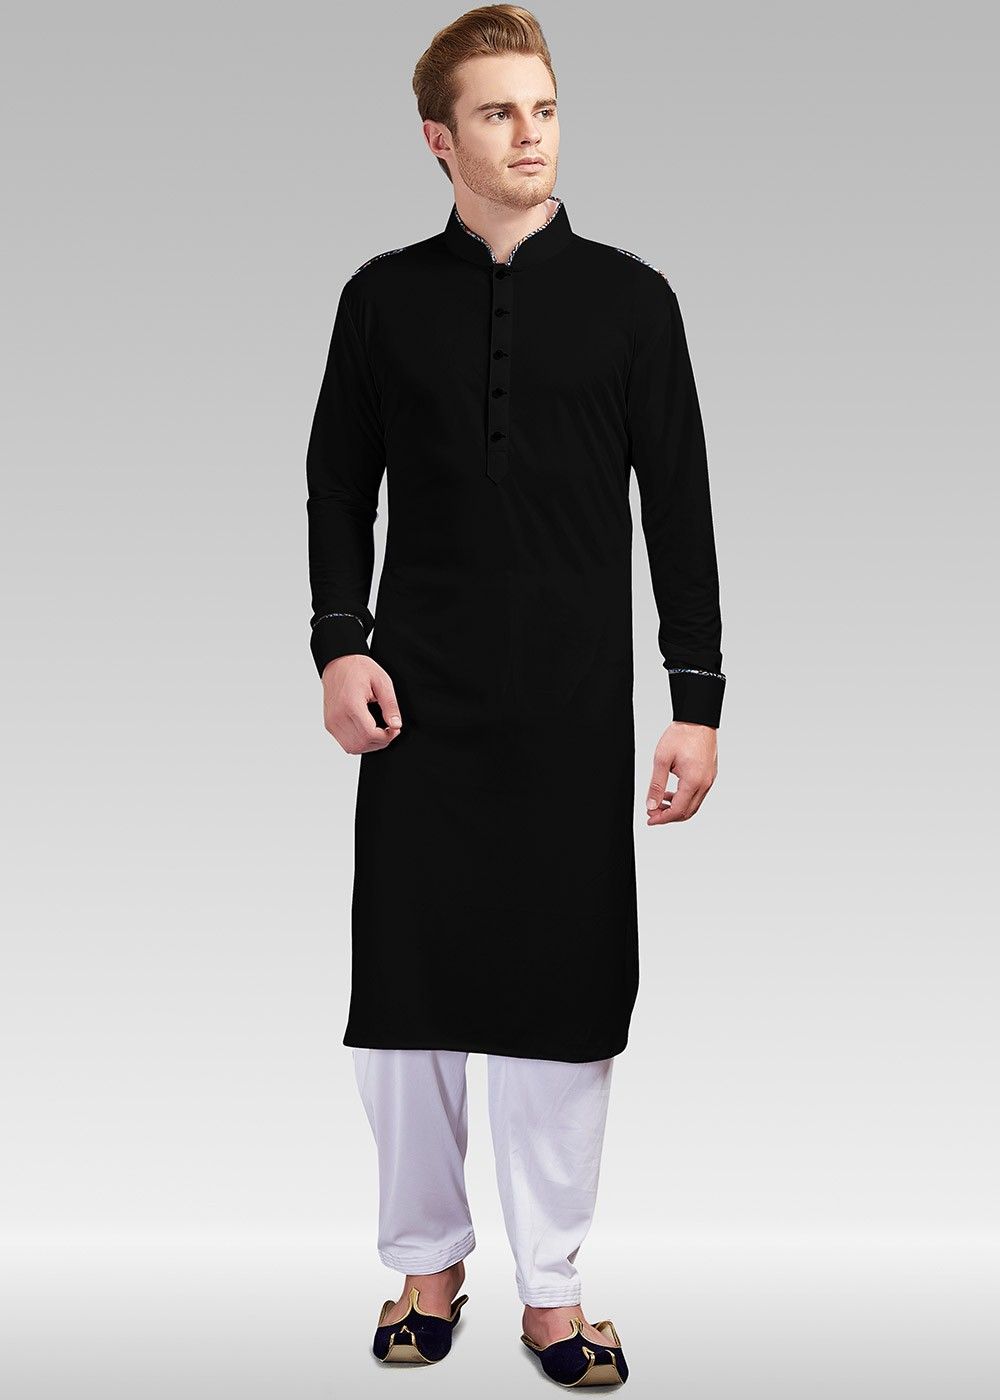 Solid black cotton rayon pathani suit - G3-MPS0540 | G3fashion.com